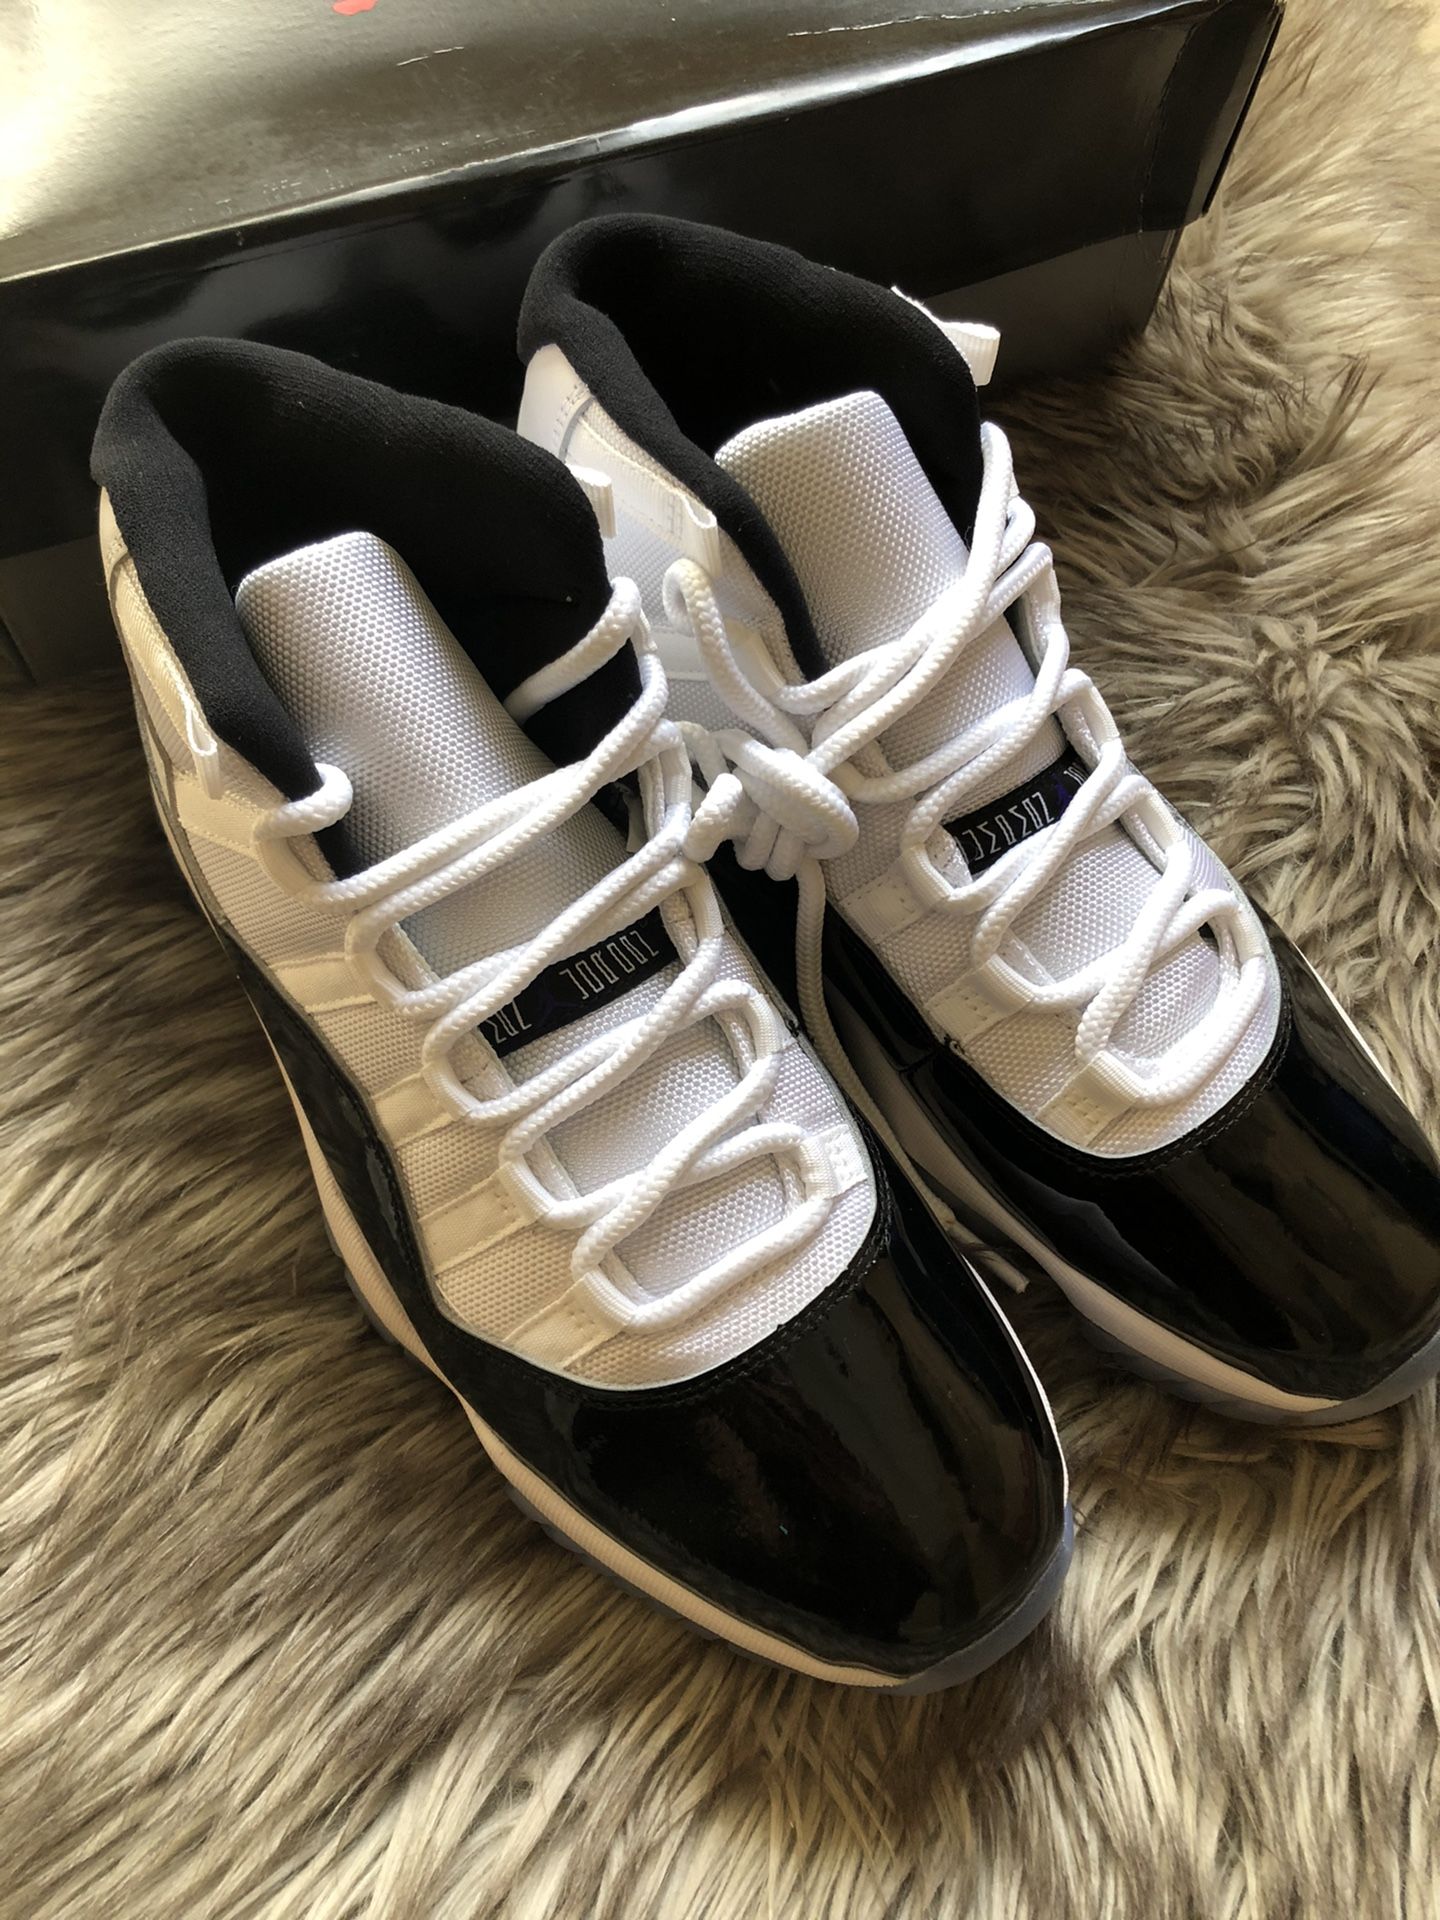 Nike Air Jordan 11 Retro Men's Shoes - White And Black/Concord, 10.5 US